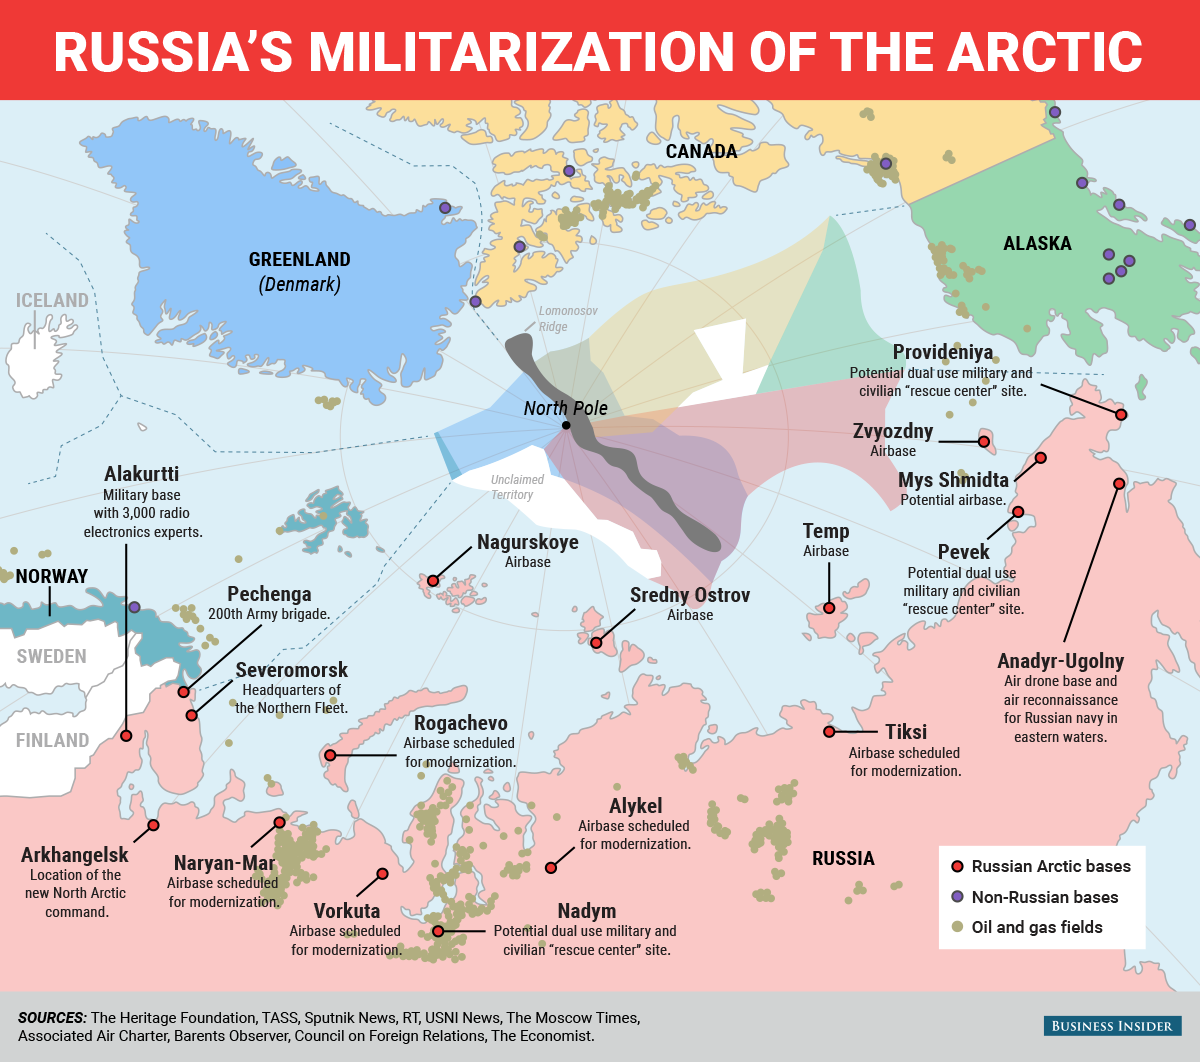 bi_graphics_russia%27s%20militarization%20of%20the%20arctic_05.png